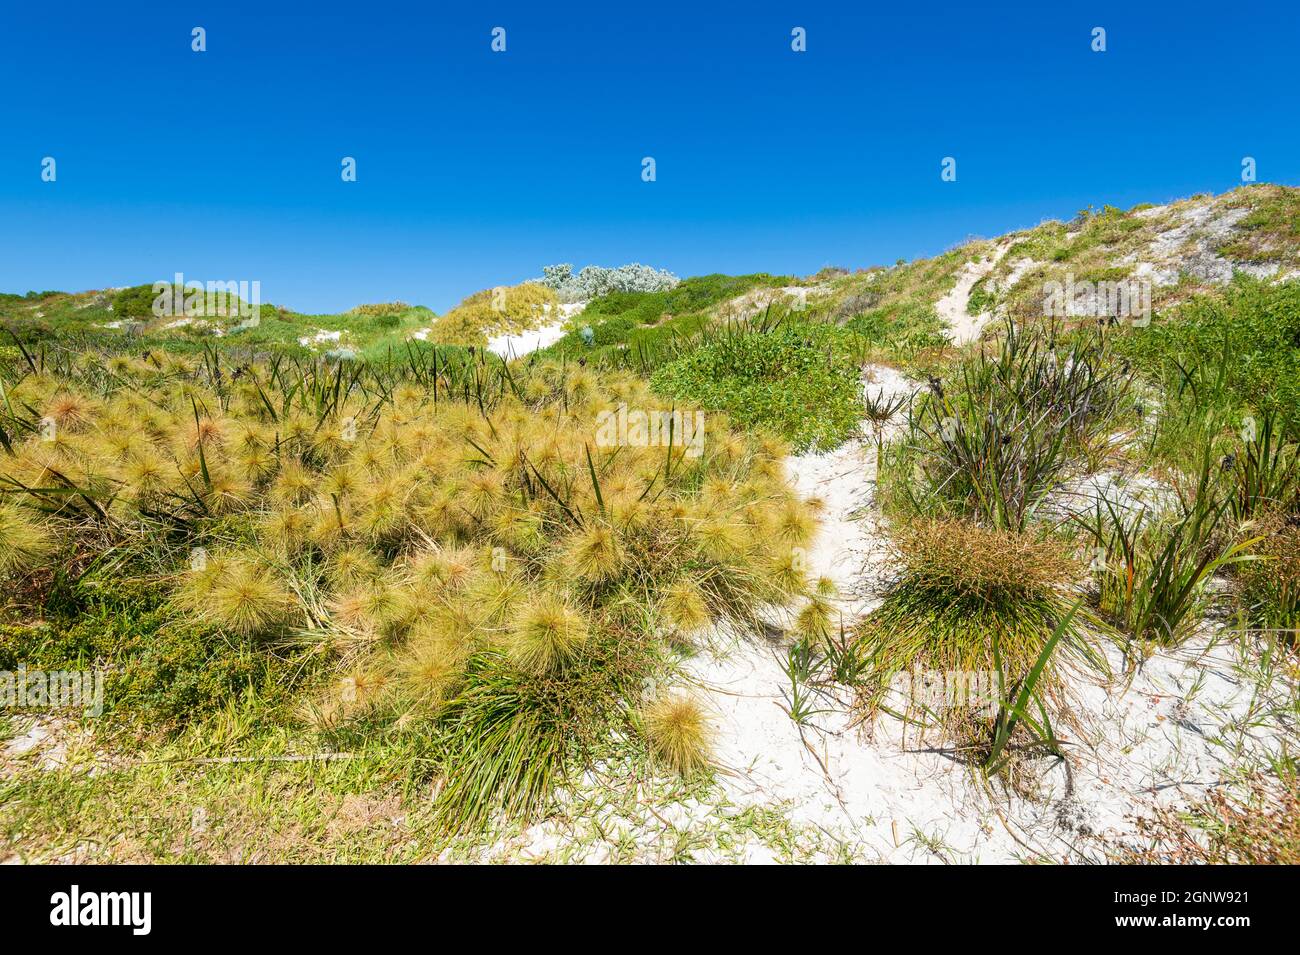 Typical coastal vegetation in the sand dunes at Wedge, Western Australia, Australia Stock Photo